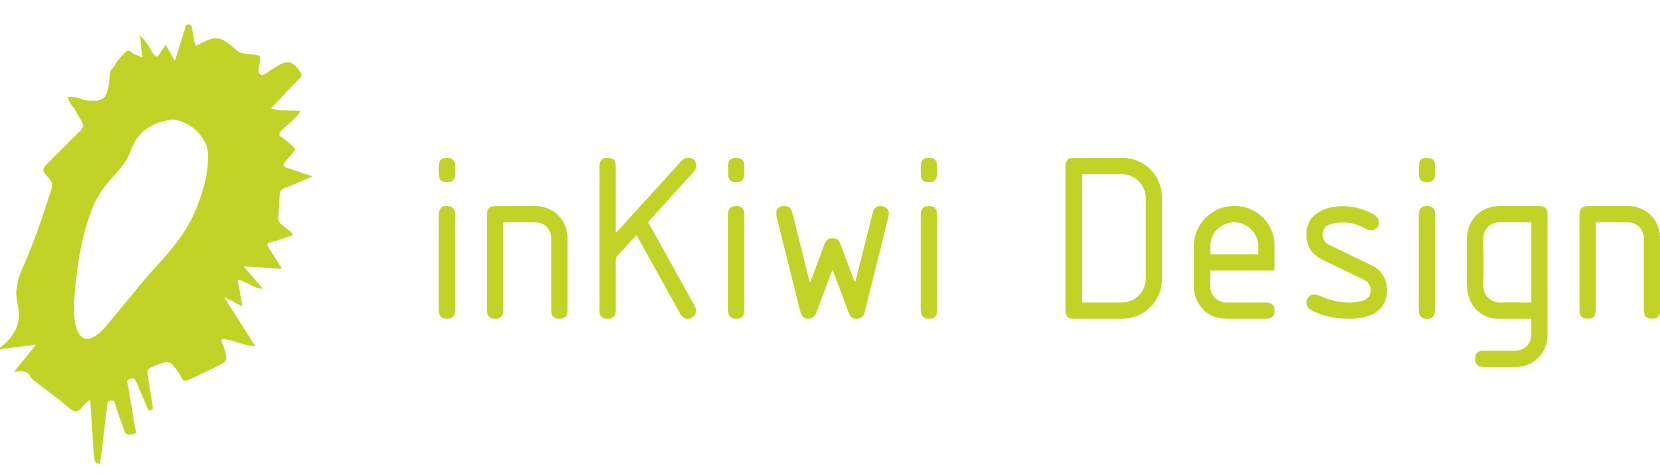 Inkiwi Design 室內設計公司